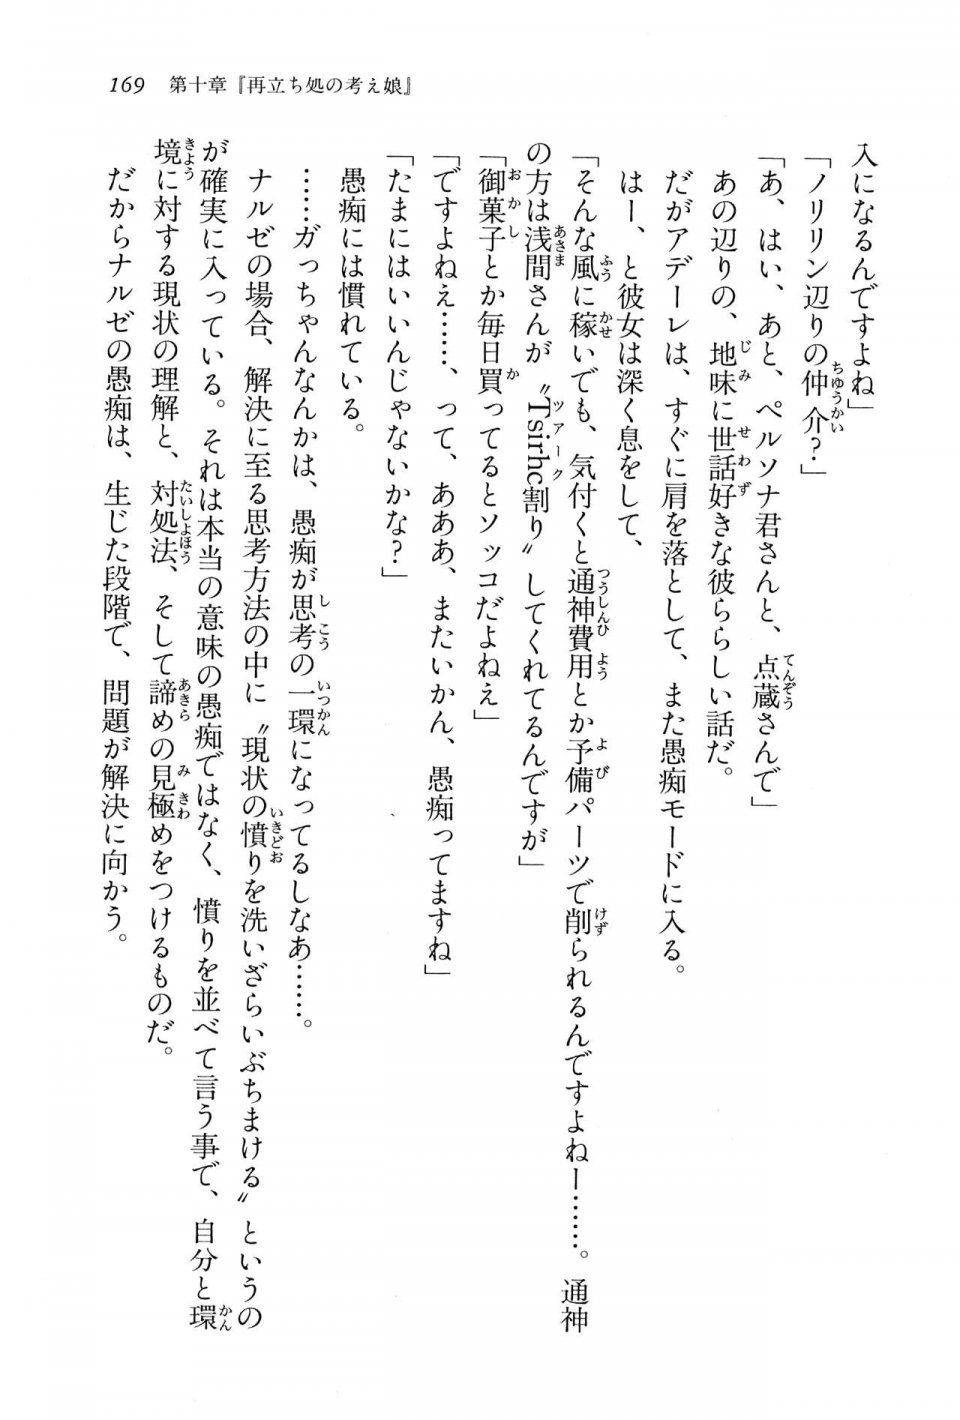 Kyoukai Senjou no Horizon BD Special Mininovel Vol 6(3B) - Photo #173